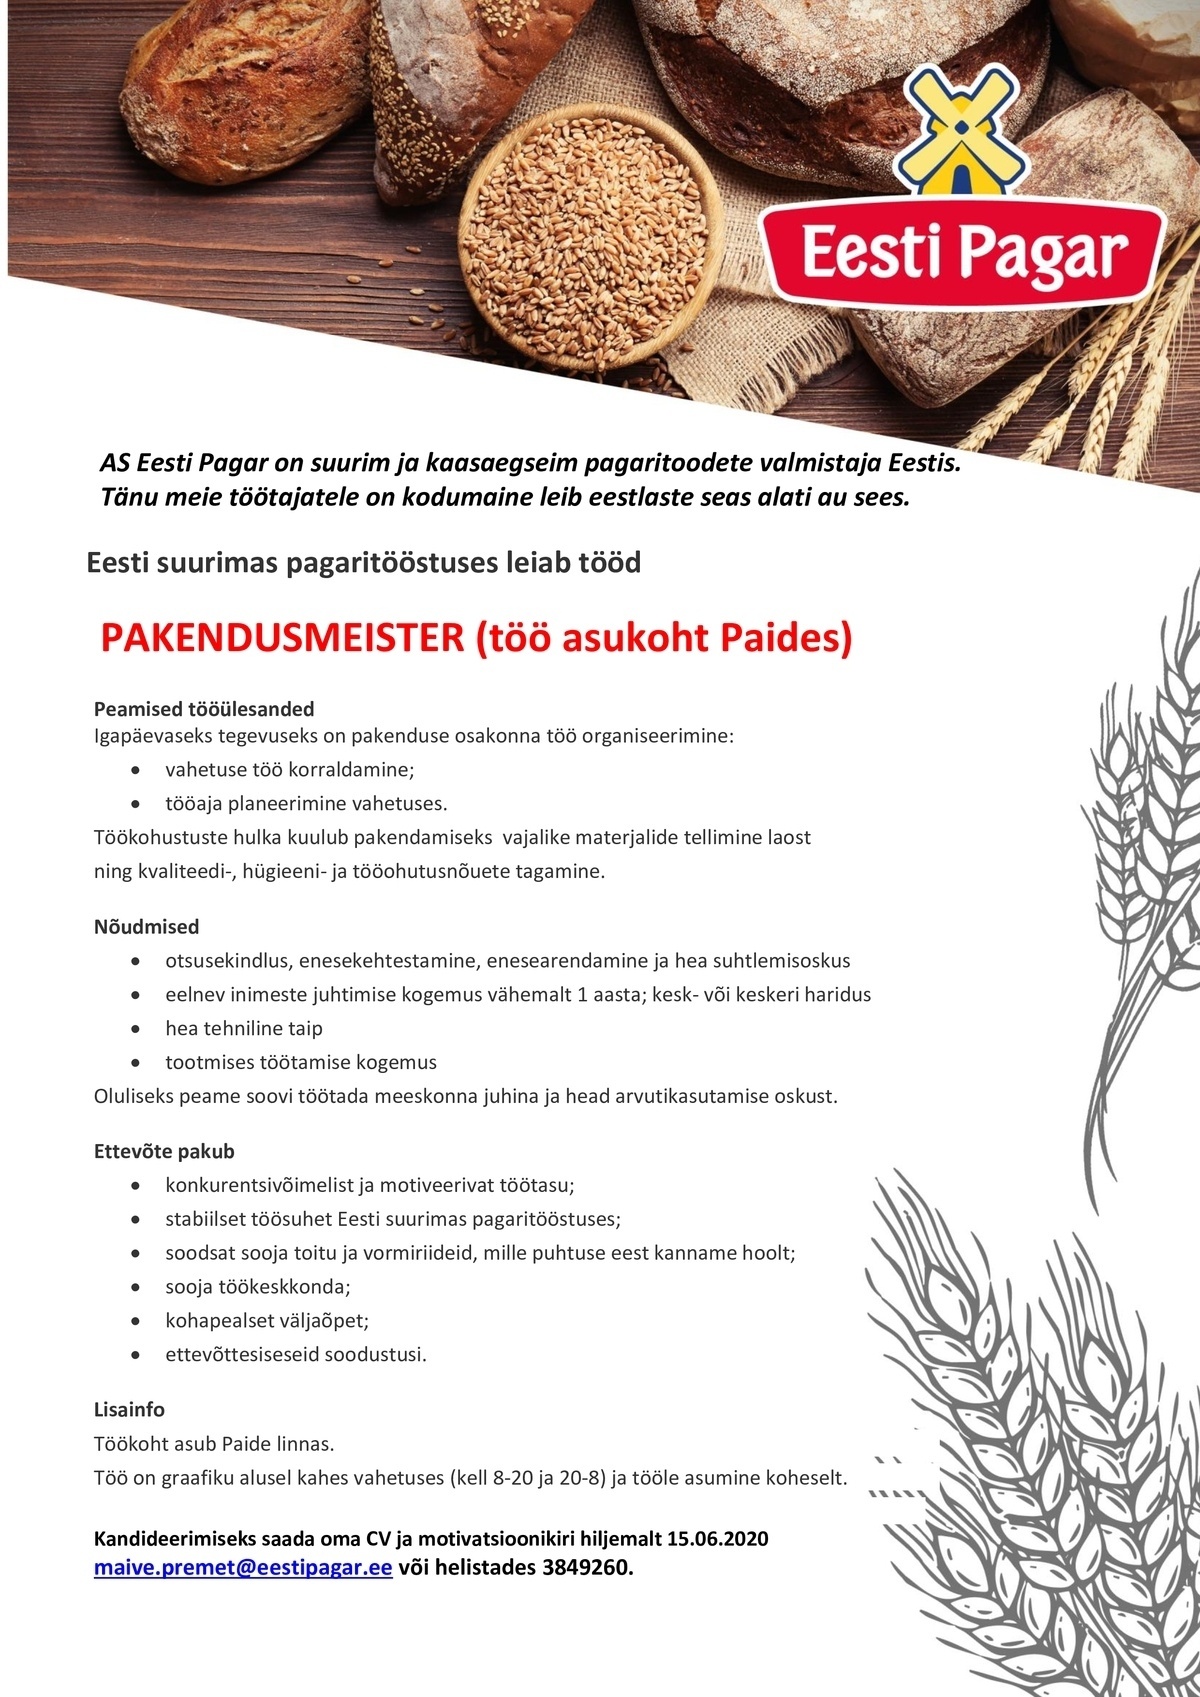 Eesti Pagar AS Pakendusmeister